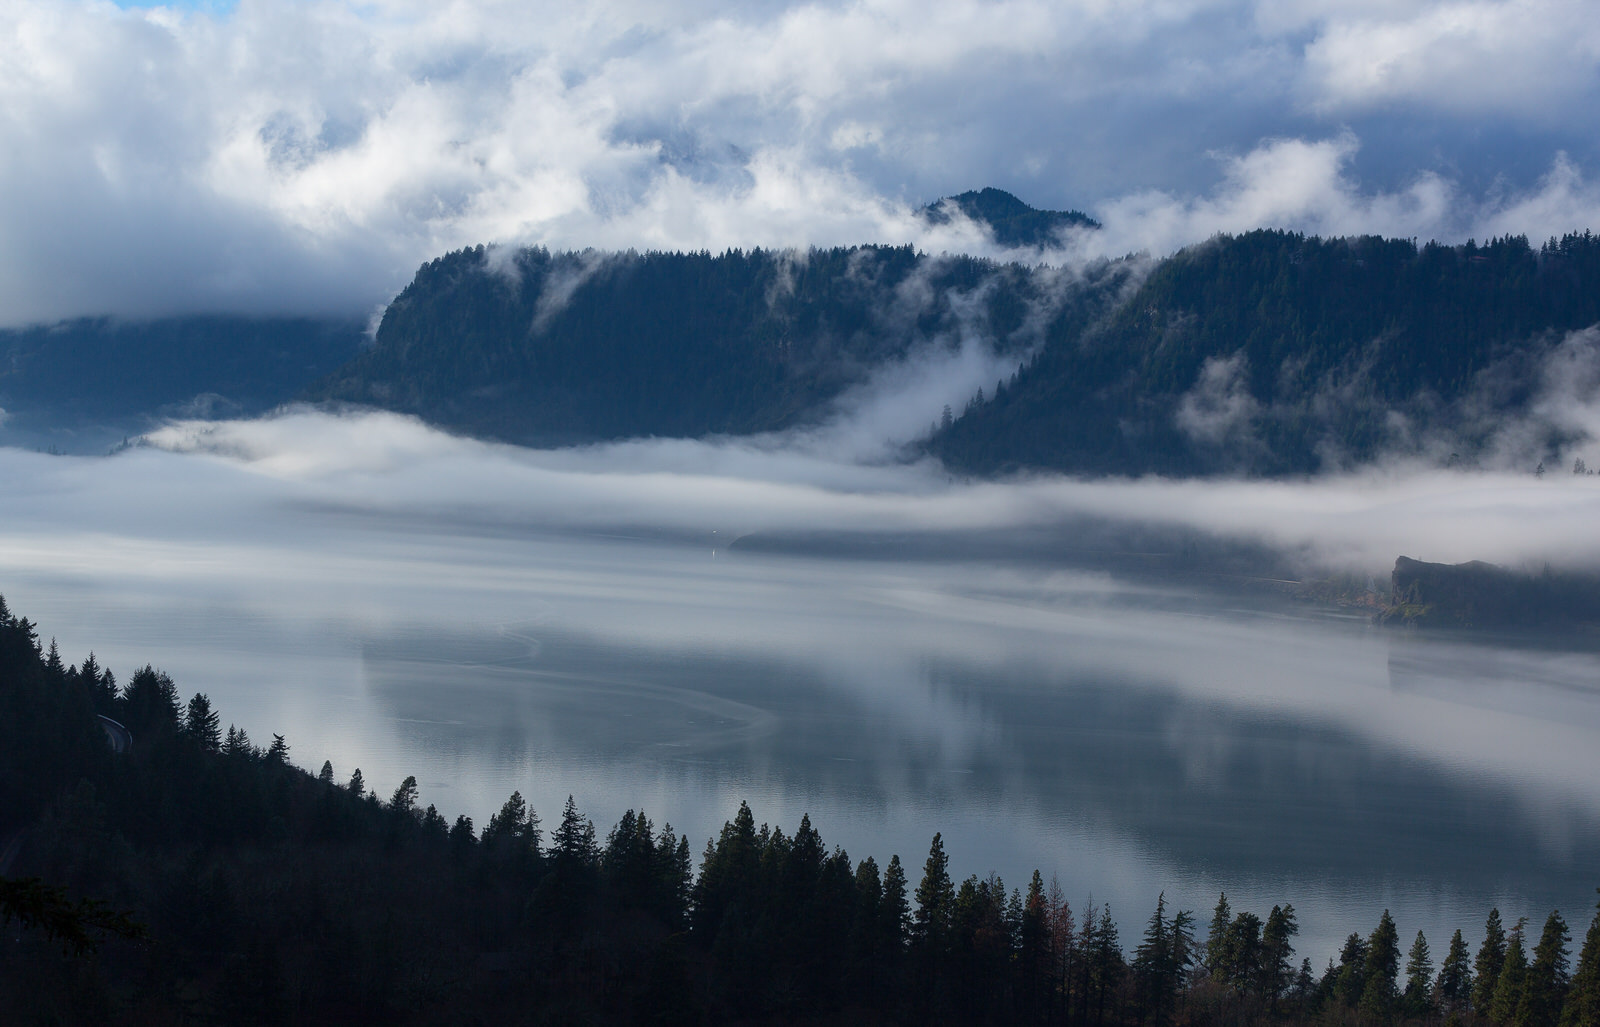  Fog flows over a calm Columbia River 